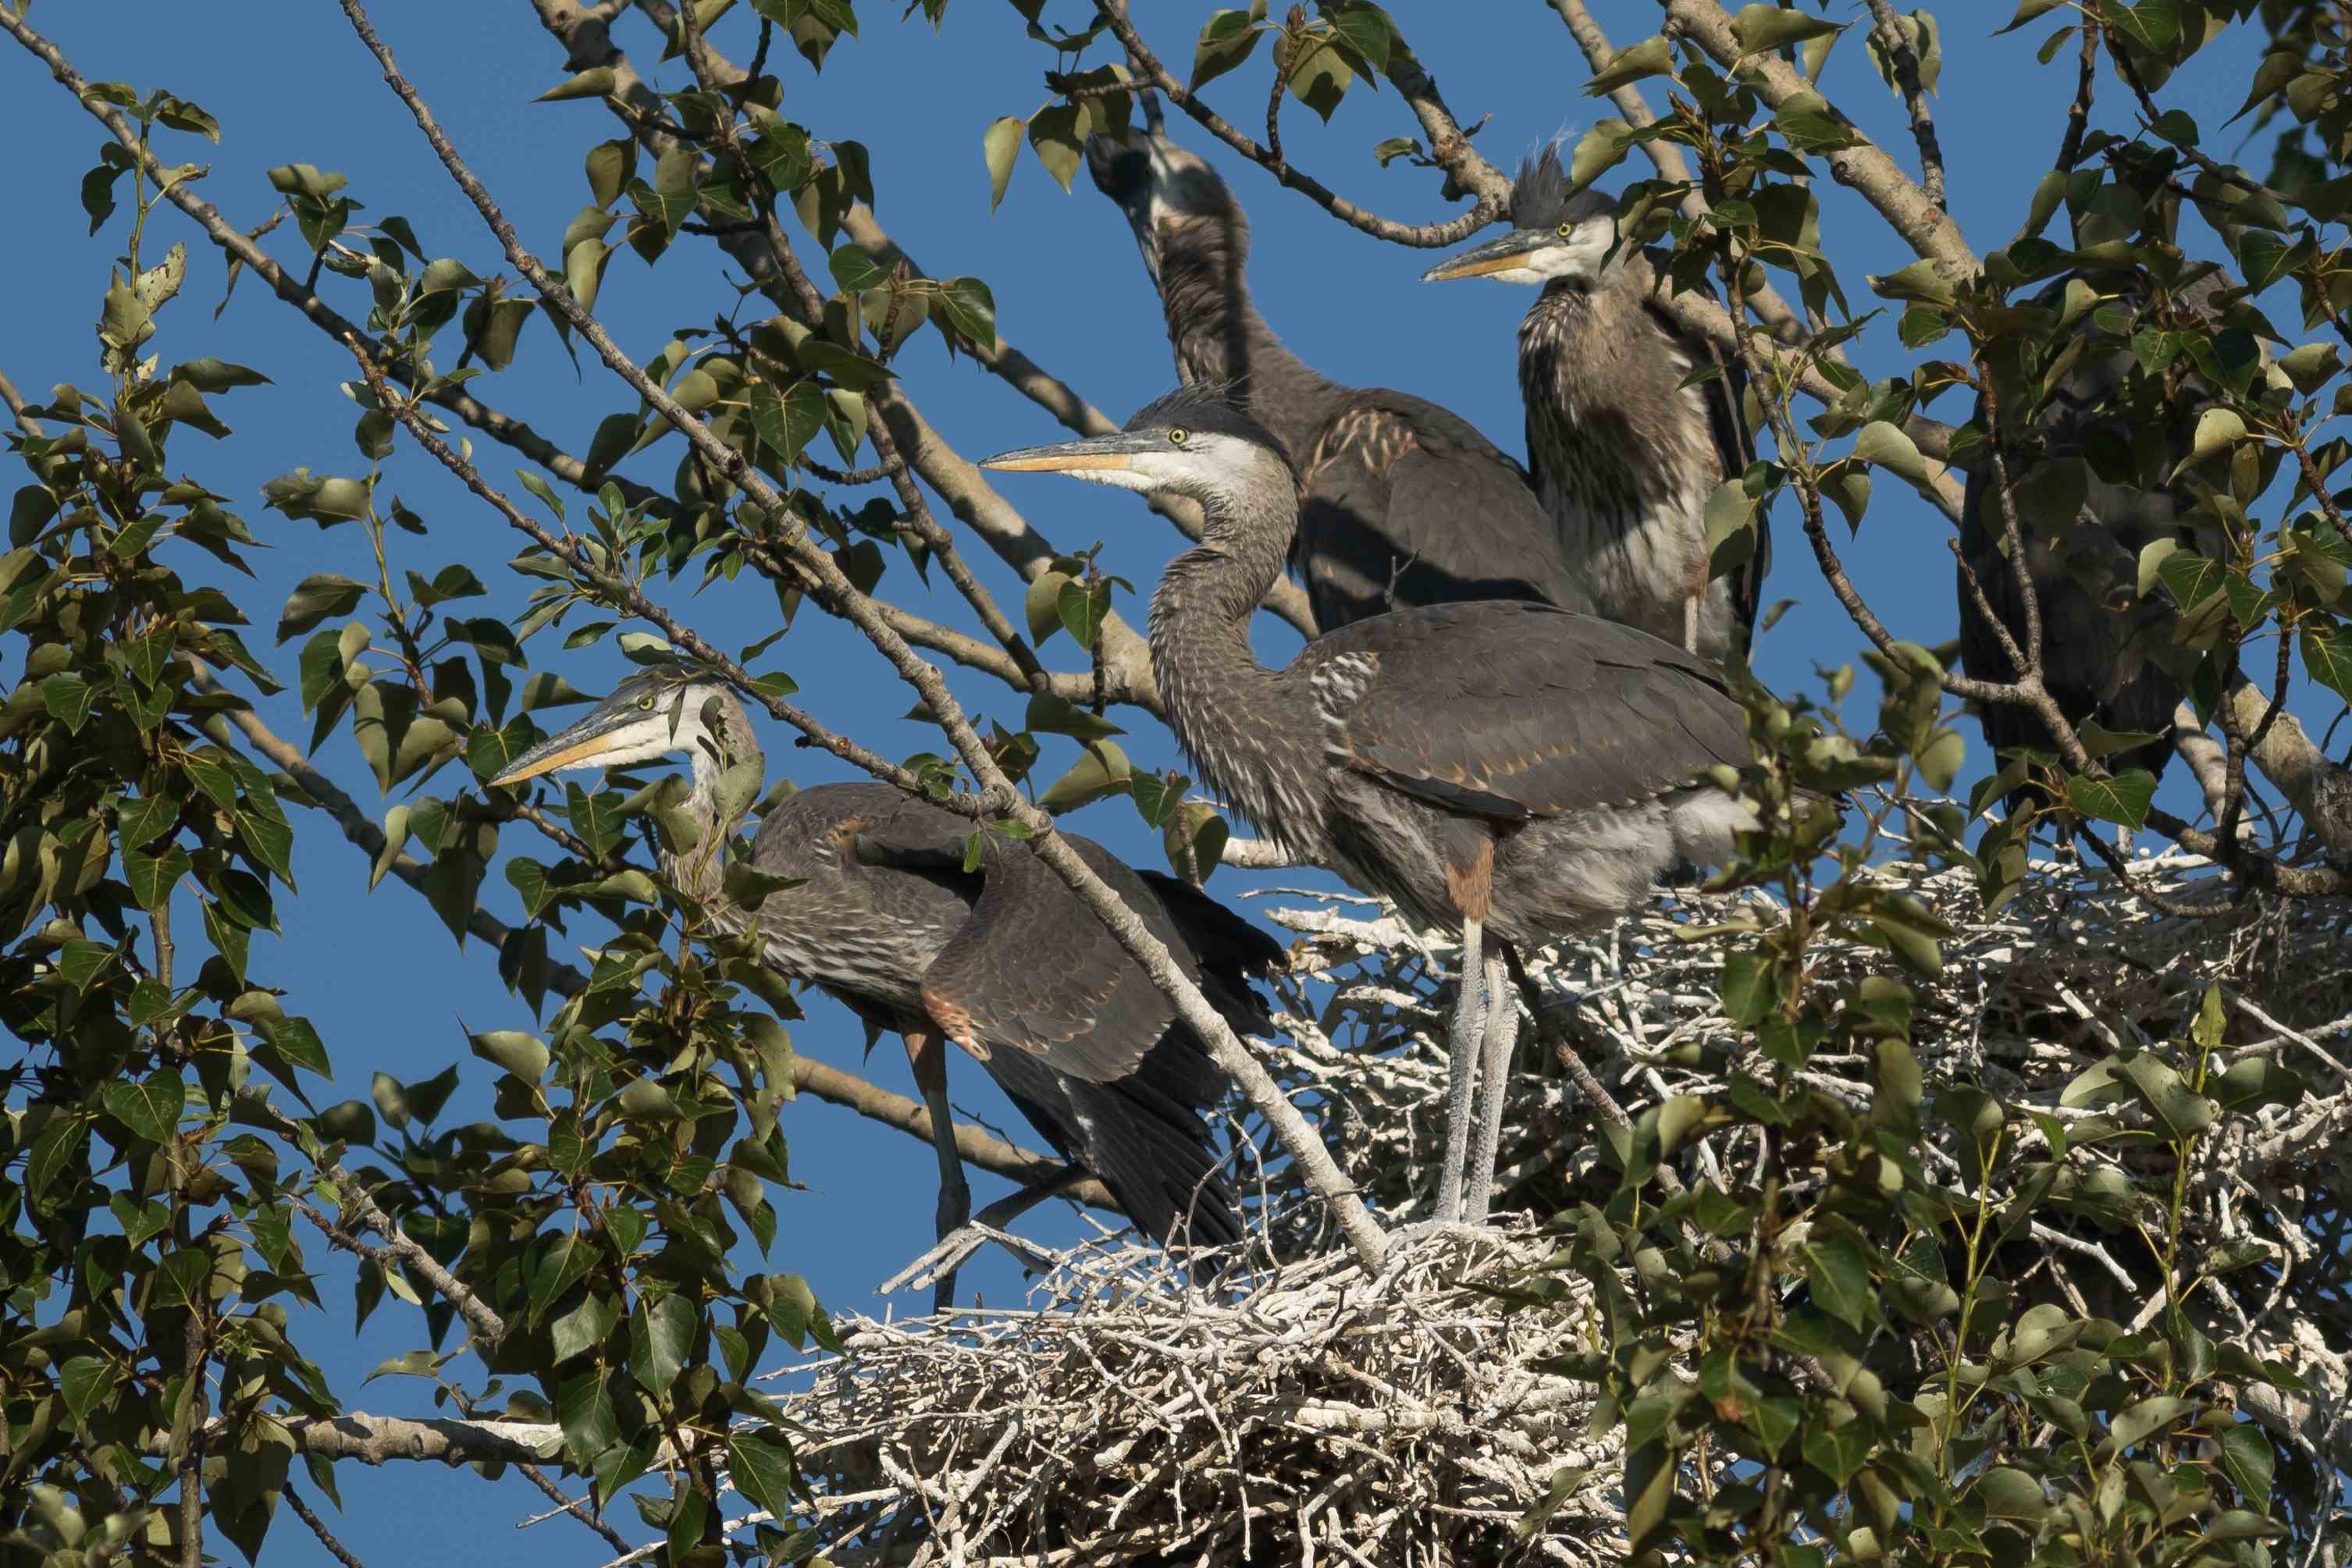 5 Blue Herons sit in nests in a tree